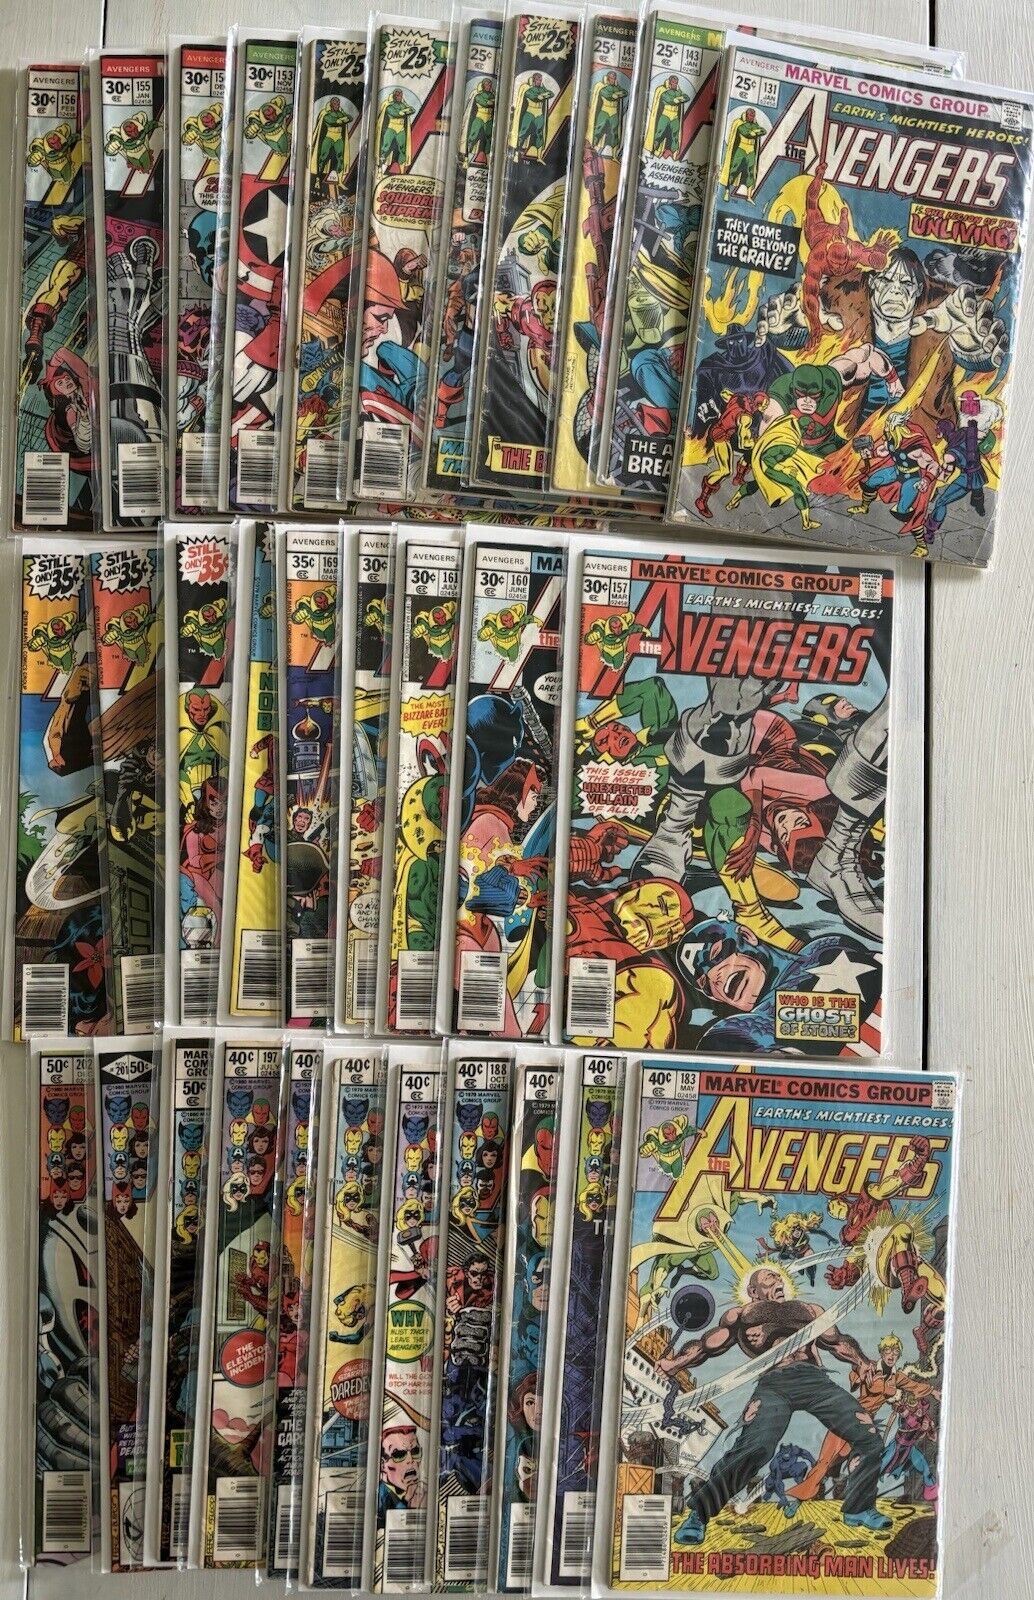 Avengers (1963) Comics lot between #131-202